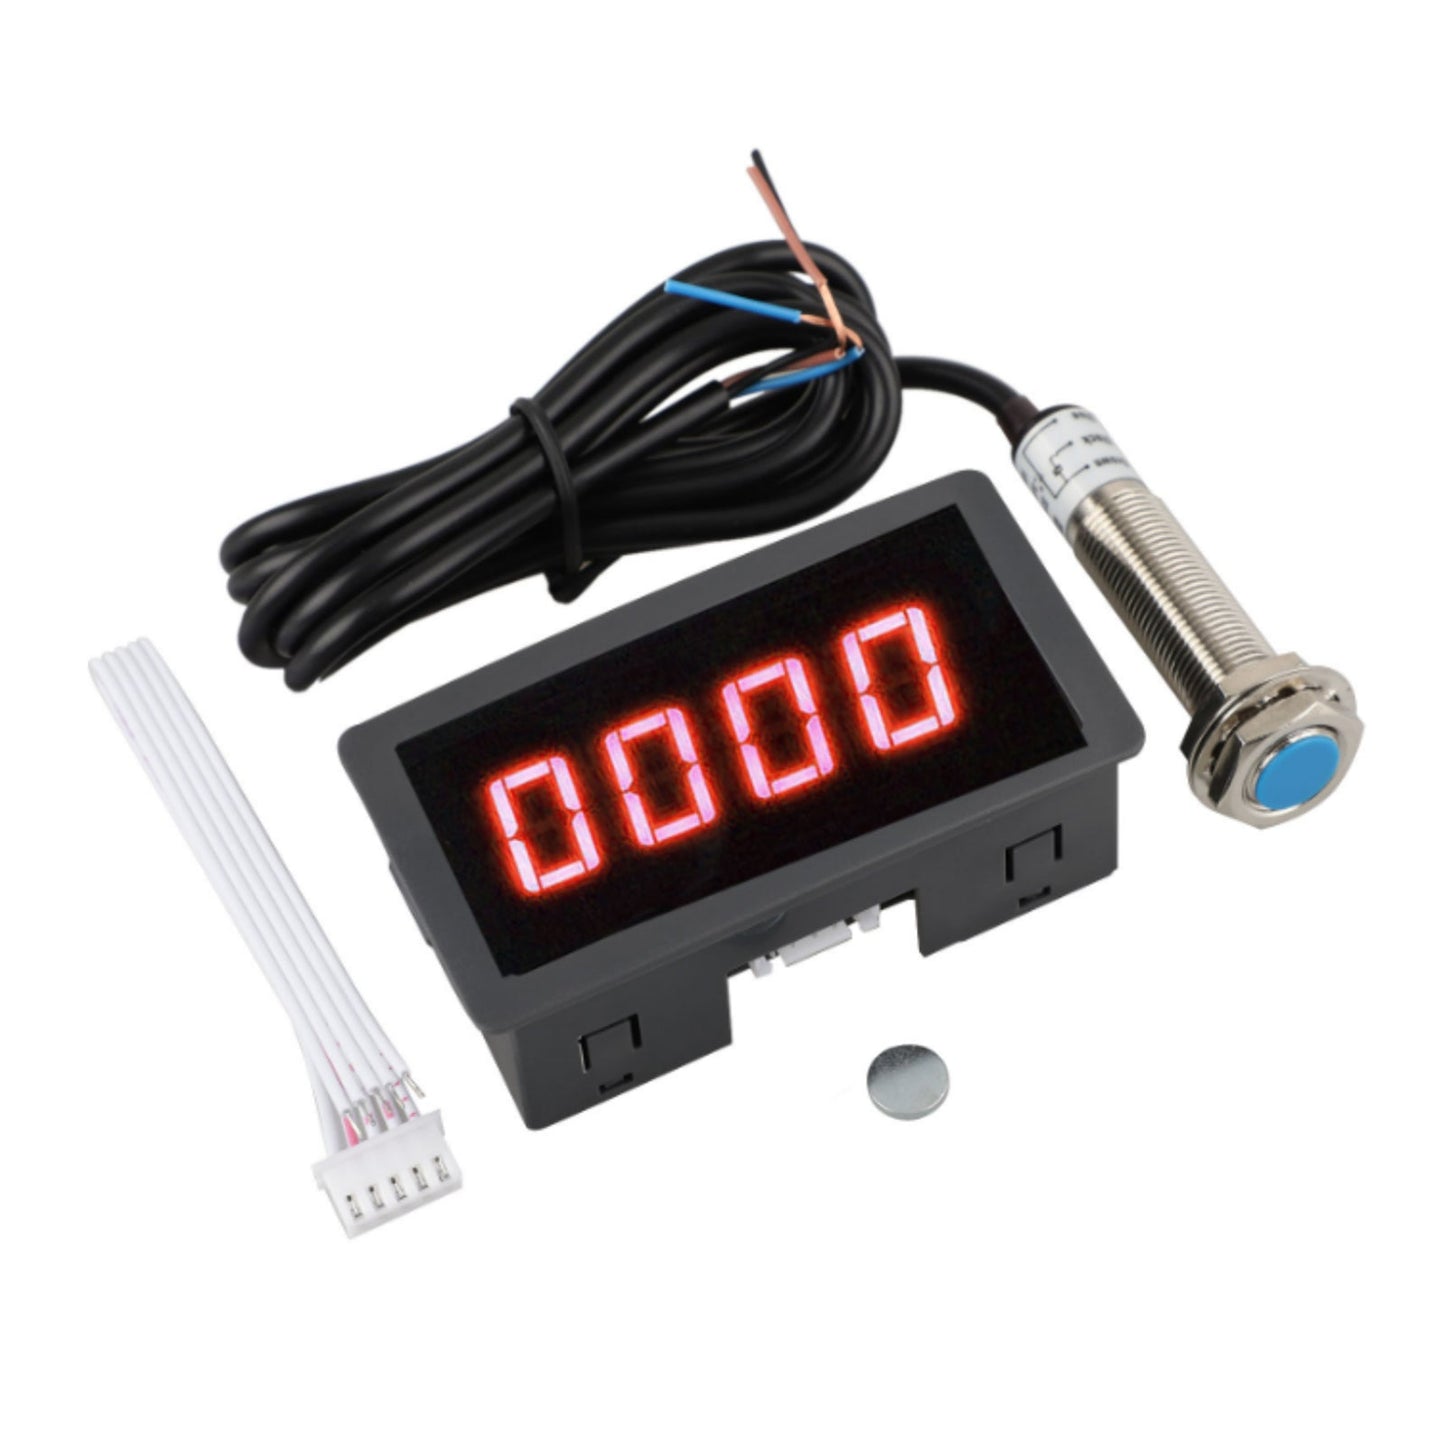 4 Digital LED Tachometer RPM Speed Meter With Hall Proximity Switch Sensor NPN